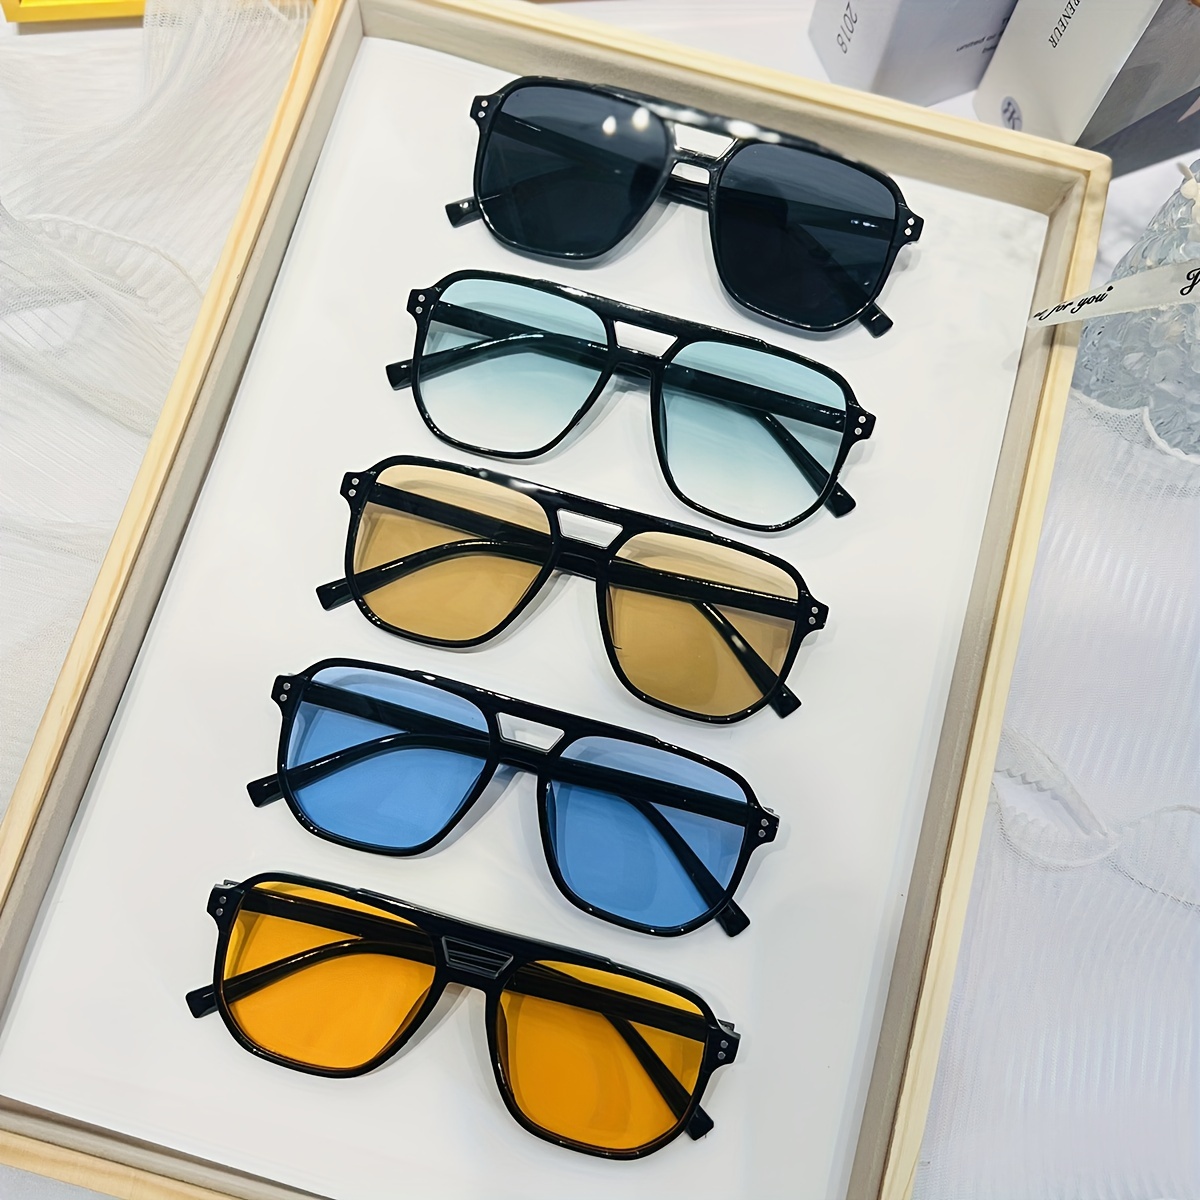 

5pcs Women's Geometric Glasses Square Colored Lenses Double-beam Flat-top Large-size Fashion Decorative Glasses For Daily Sun Protection